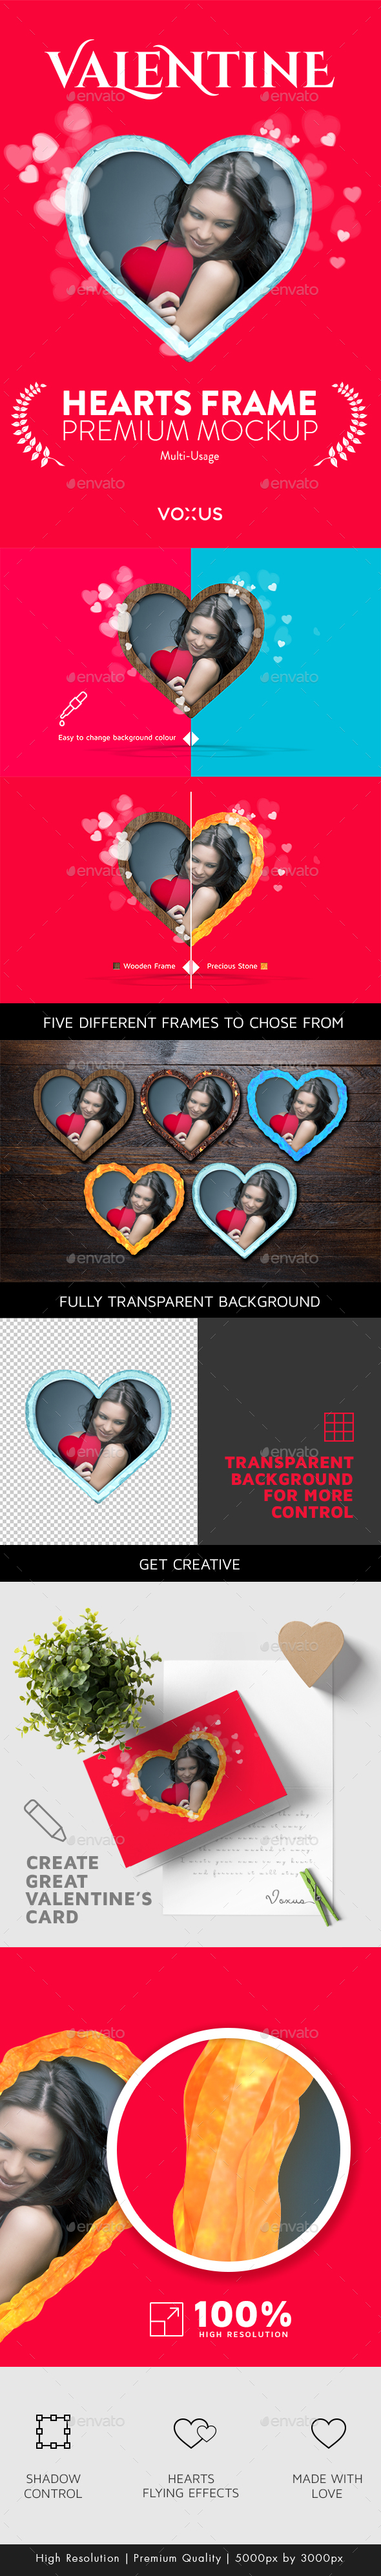 Valentine's Edition - Heart Frame Mockup